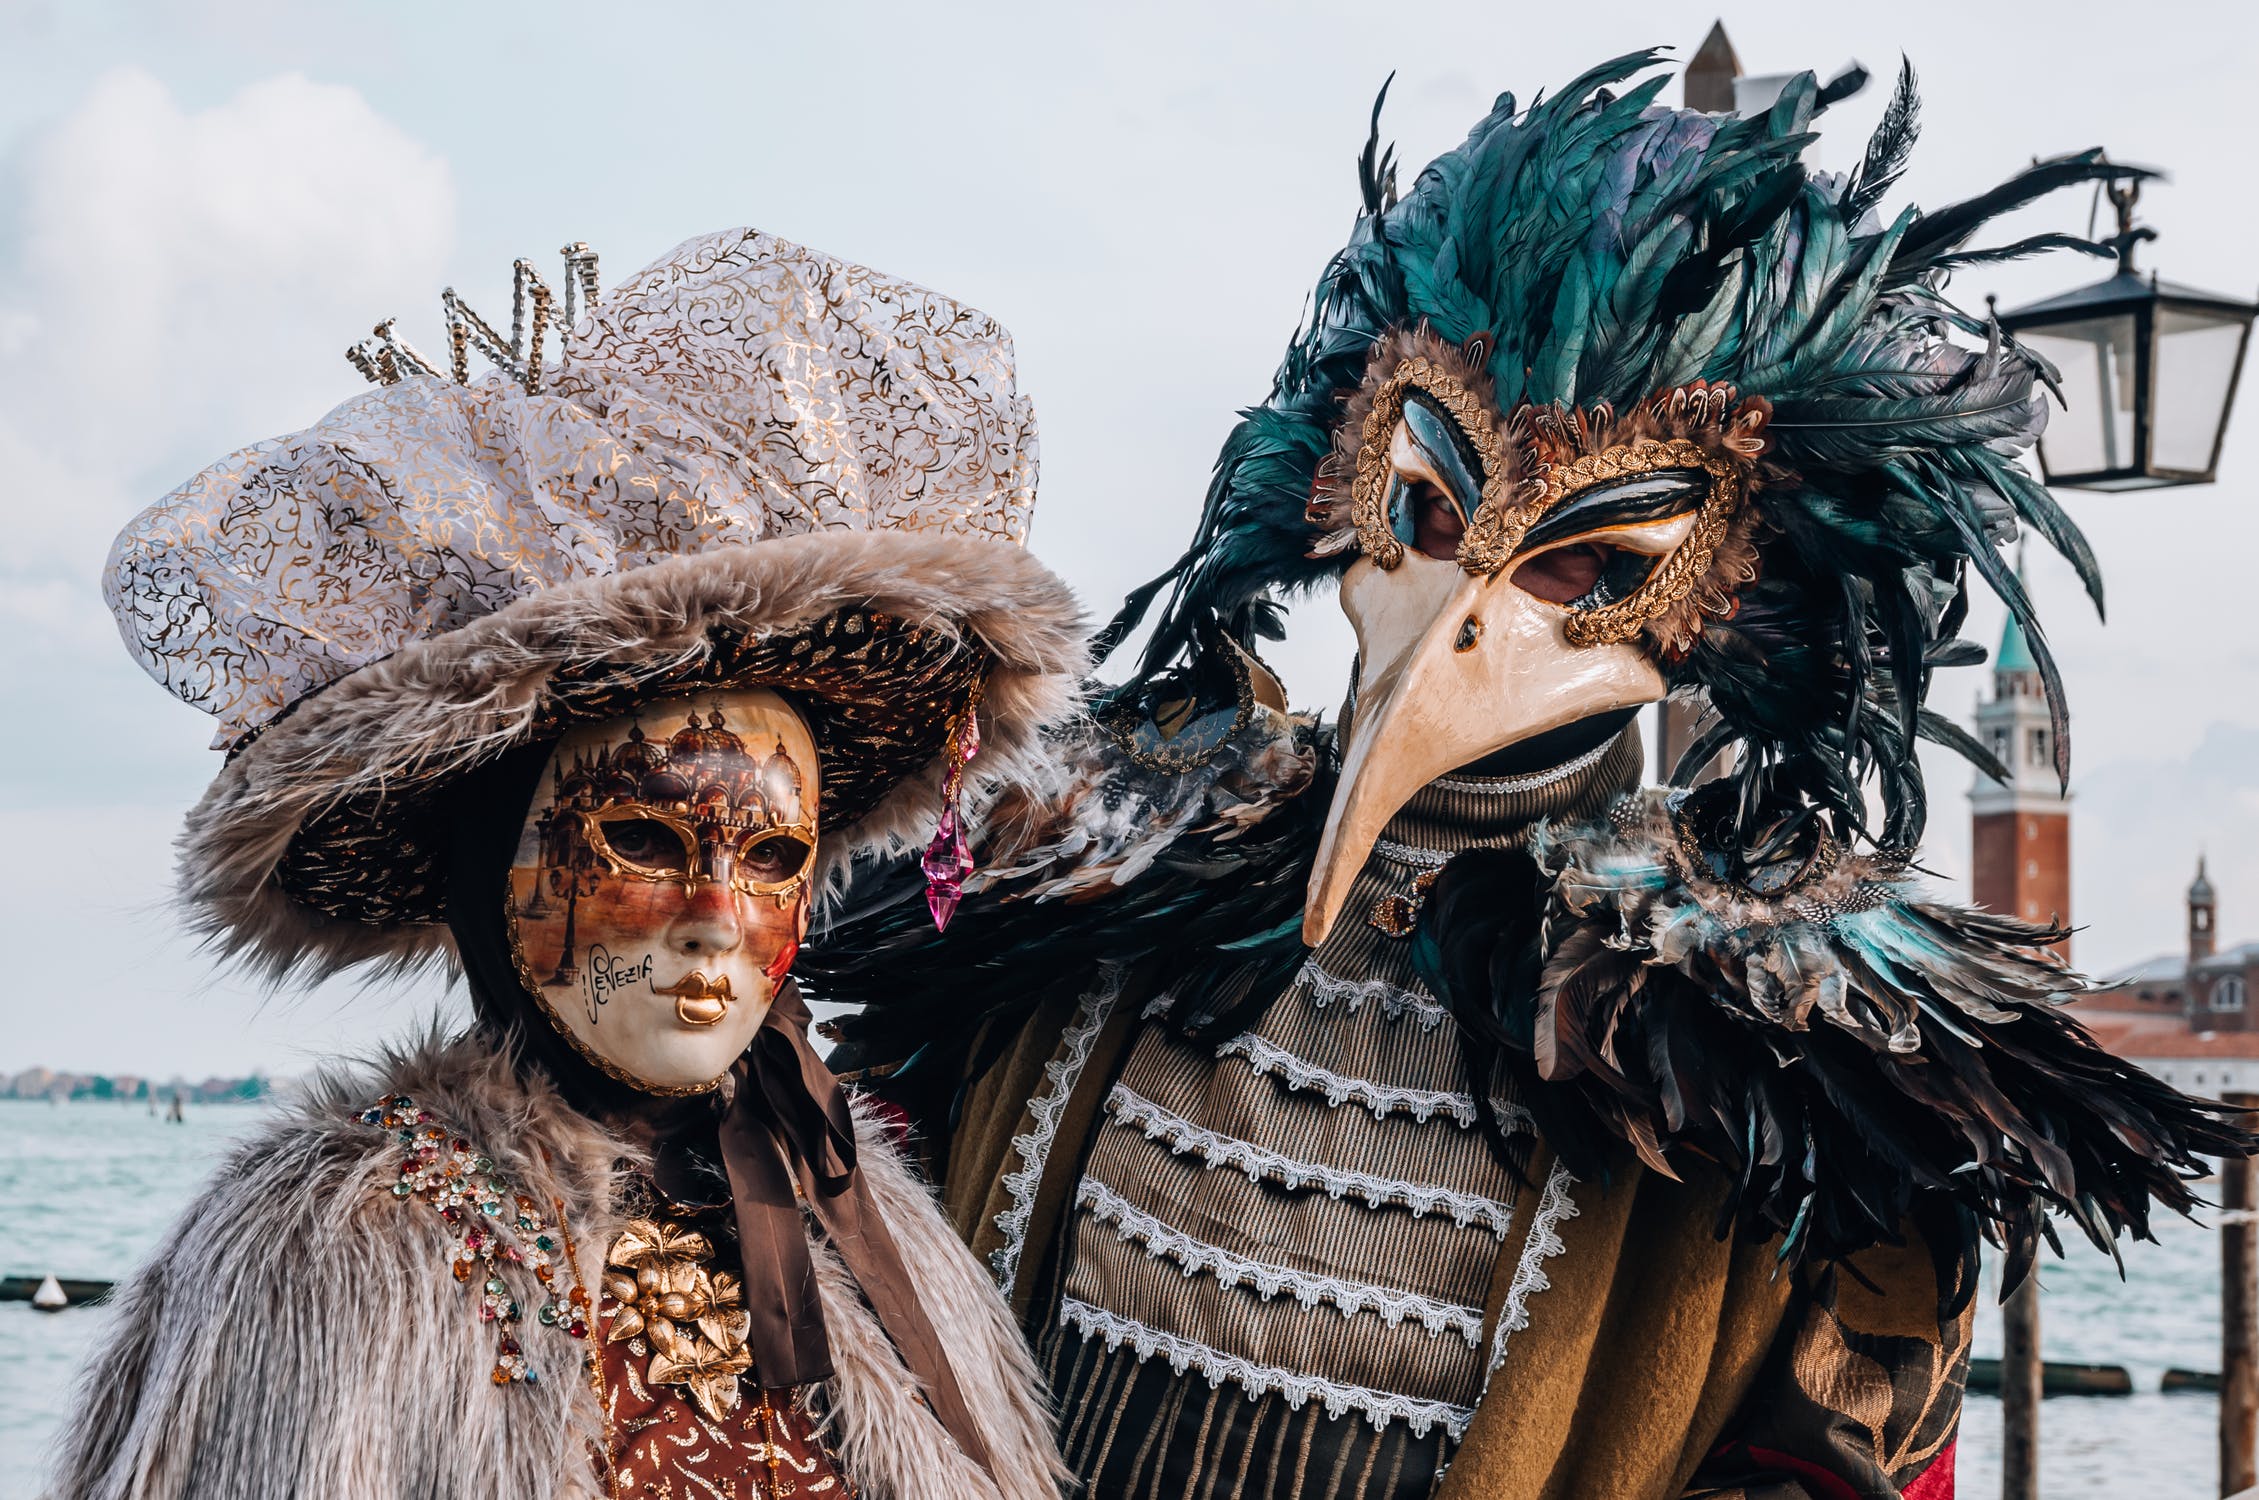 The Venice Carnival 2022